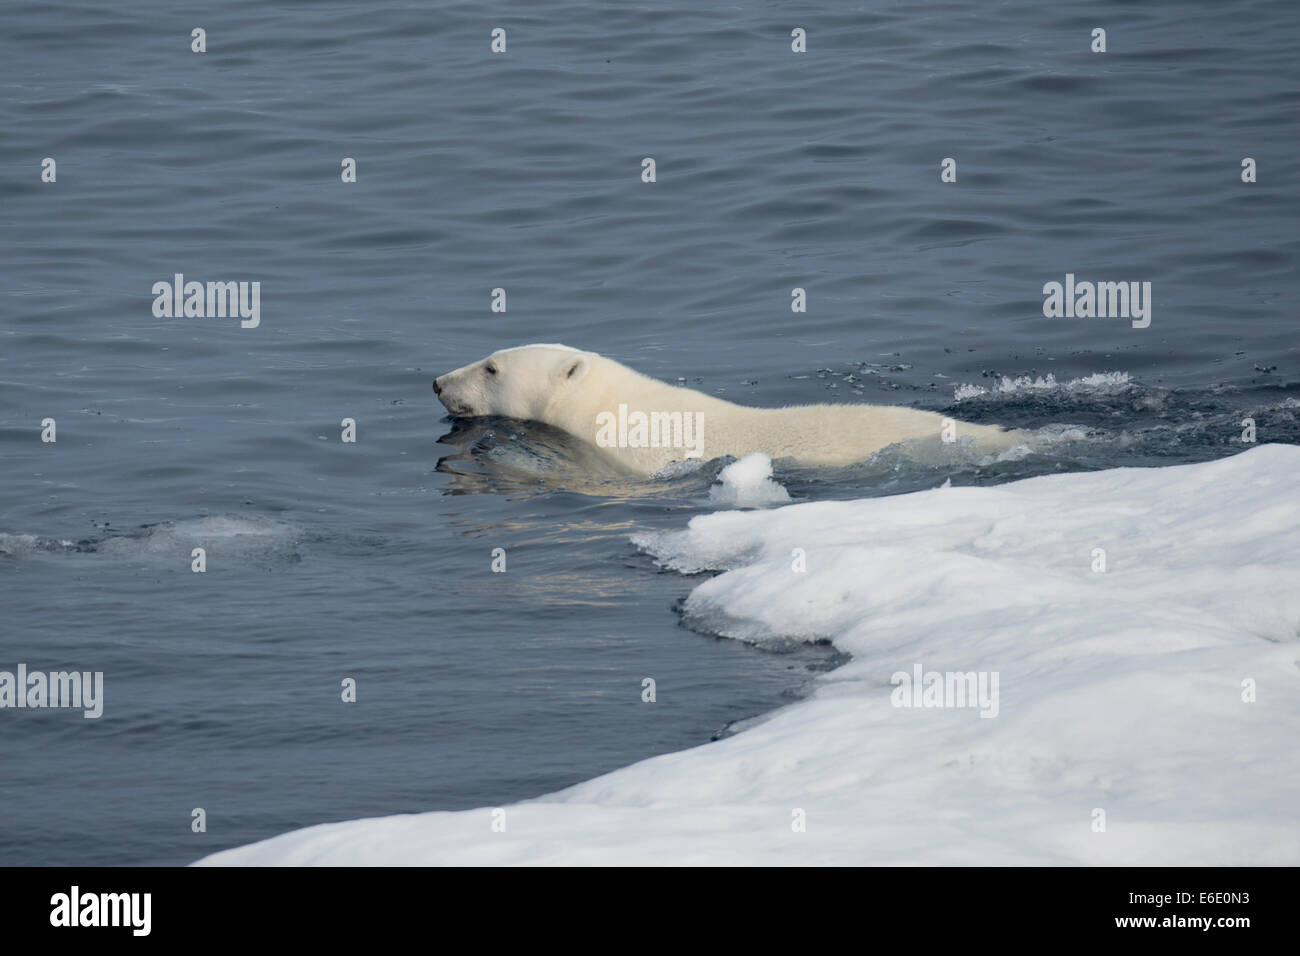 Male Polar Bear, Ursus maritimus, swimming next to an iceberg, Baffin Island, Canadian Arctic. Stock Photo